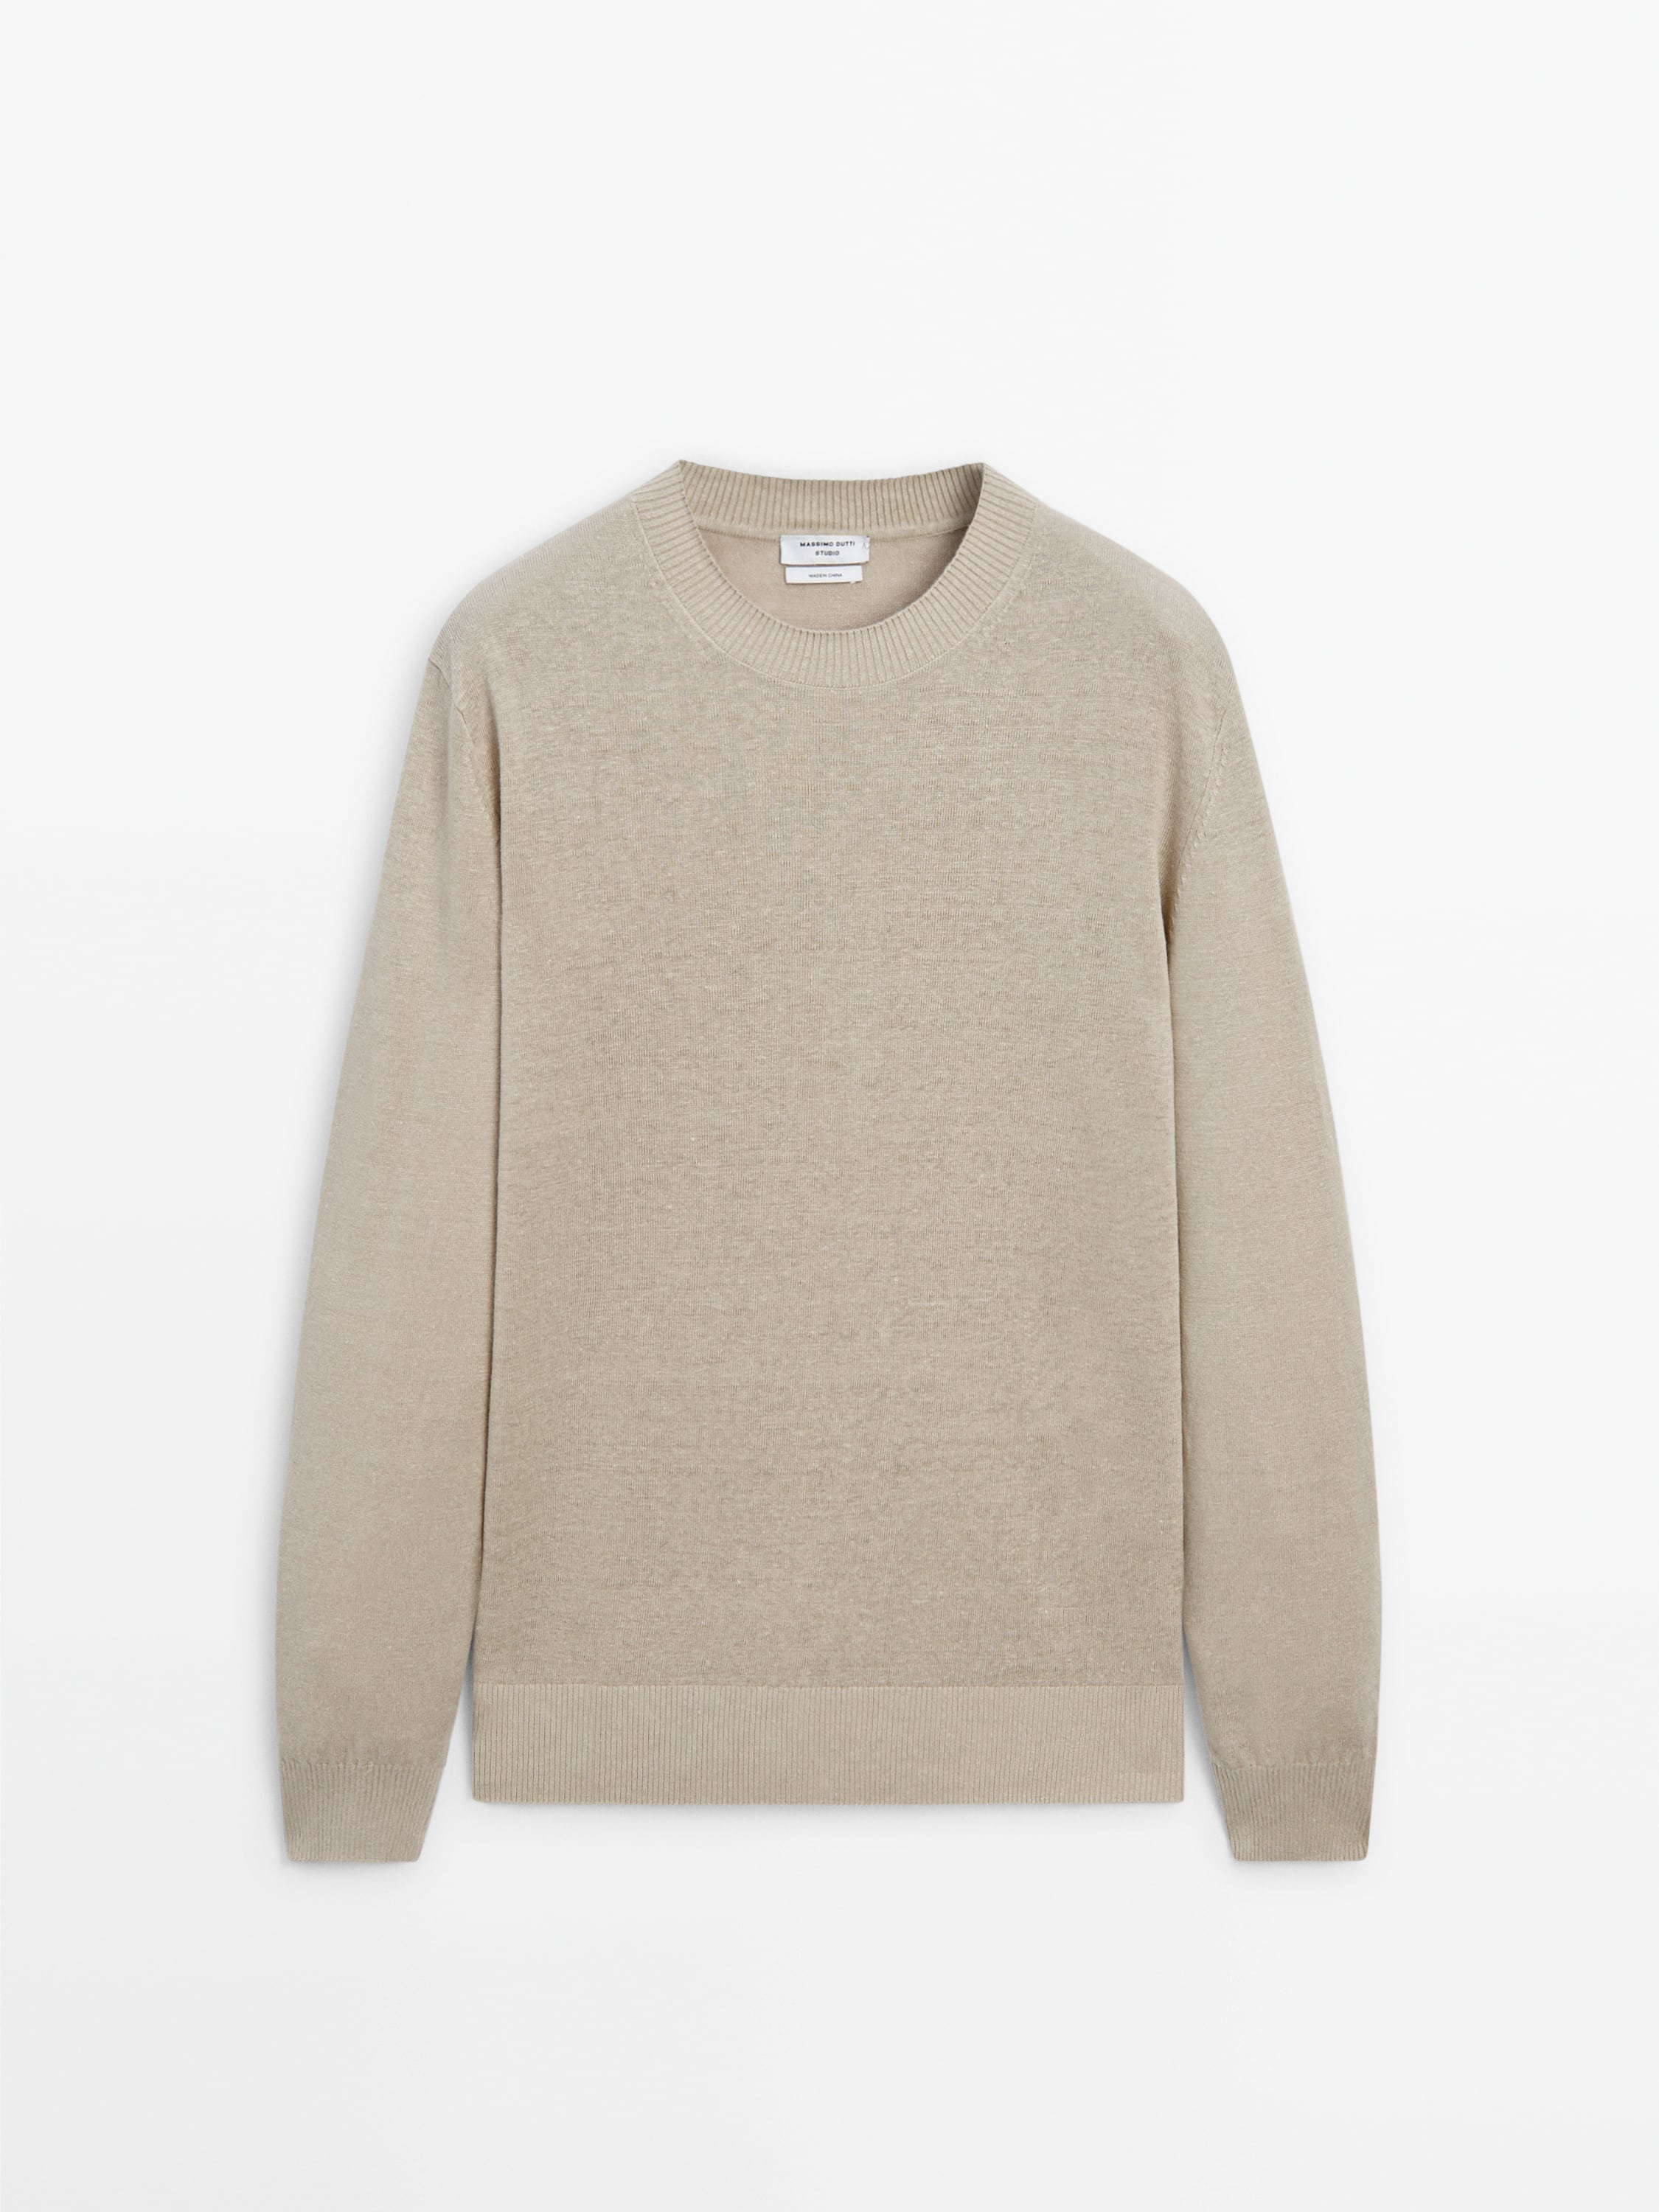 Crew neck linen sweater - Studio